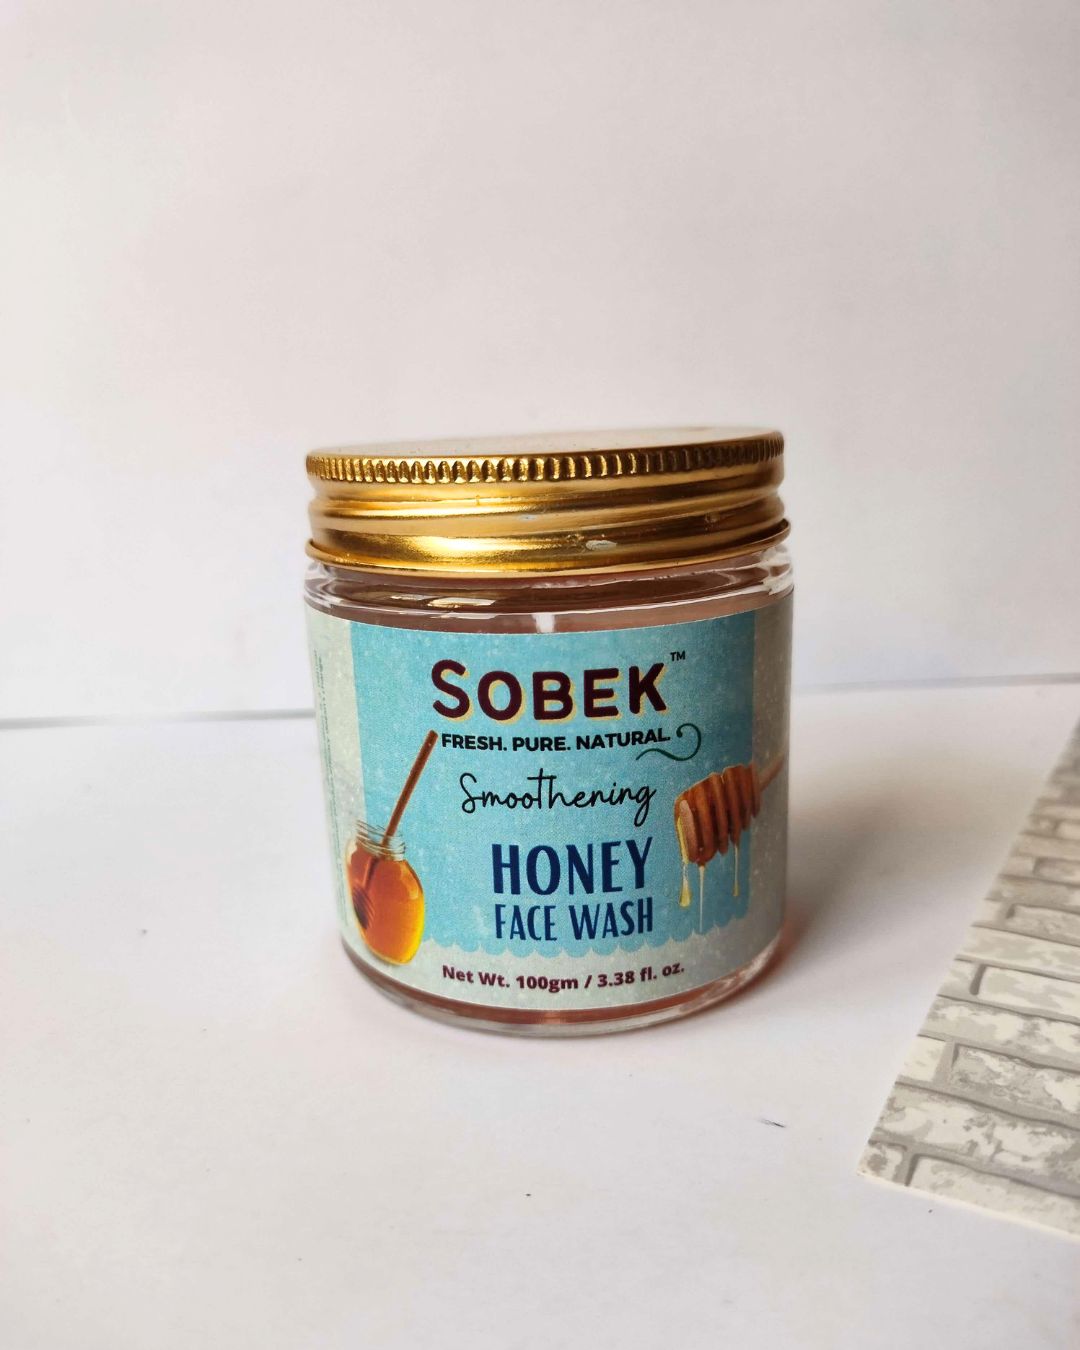 Sobek honey facewash glass jar with golden lid on white wall